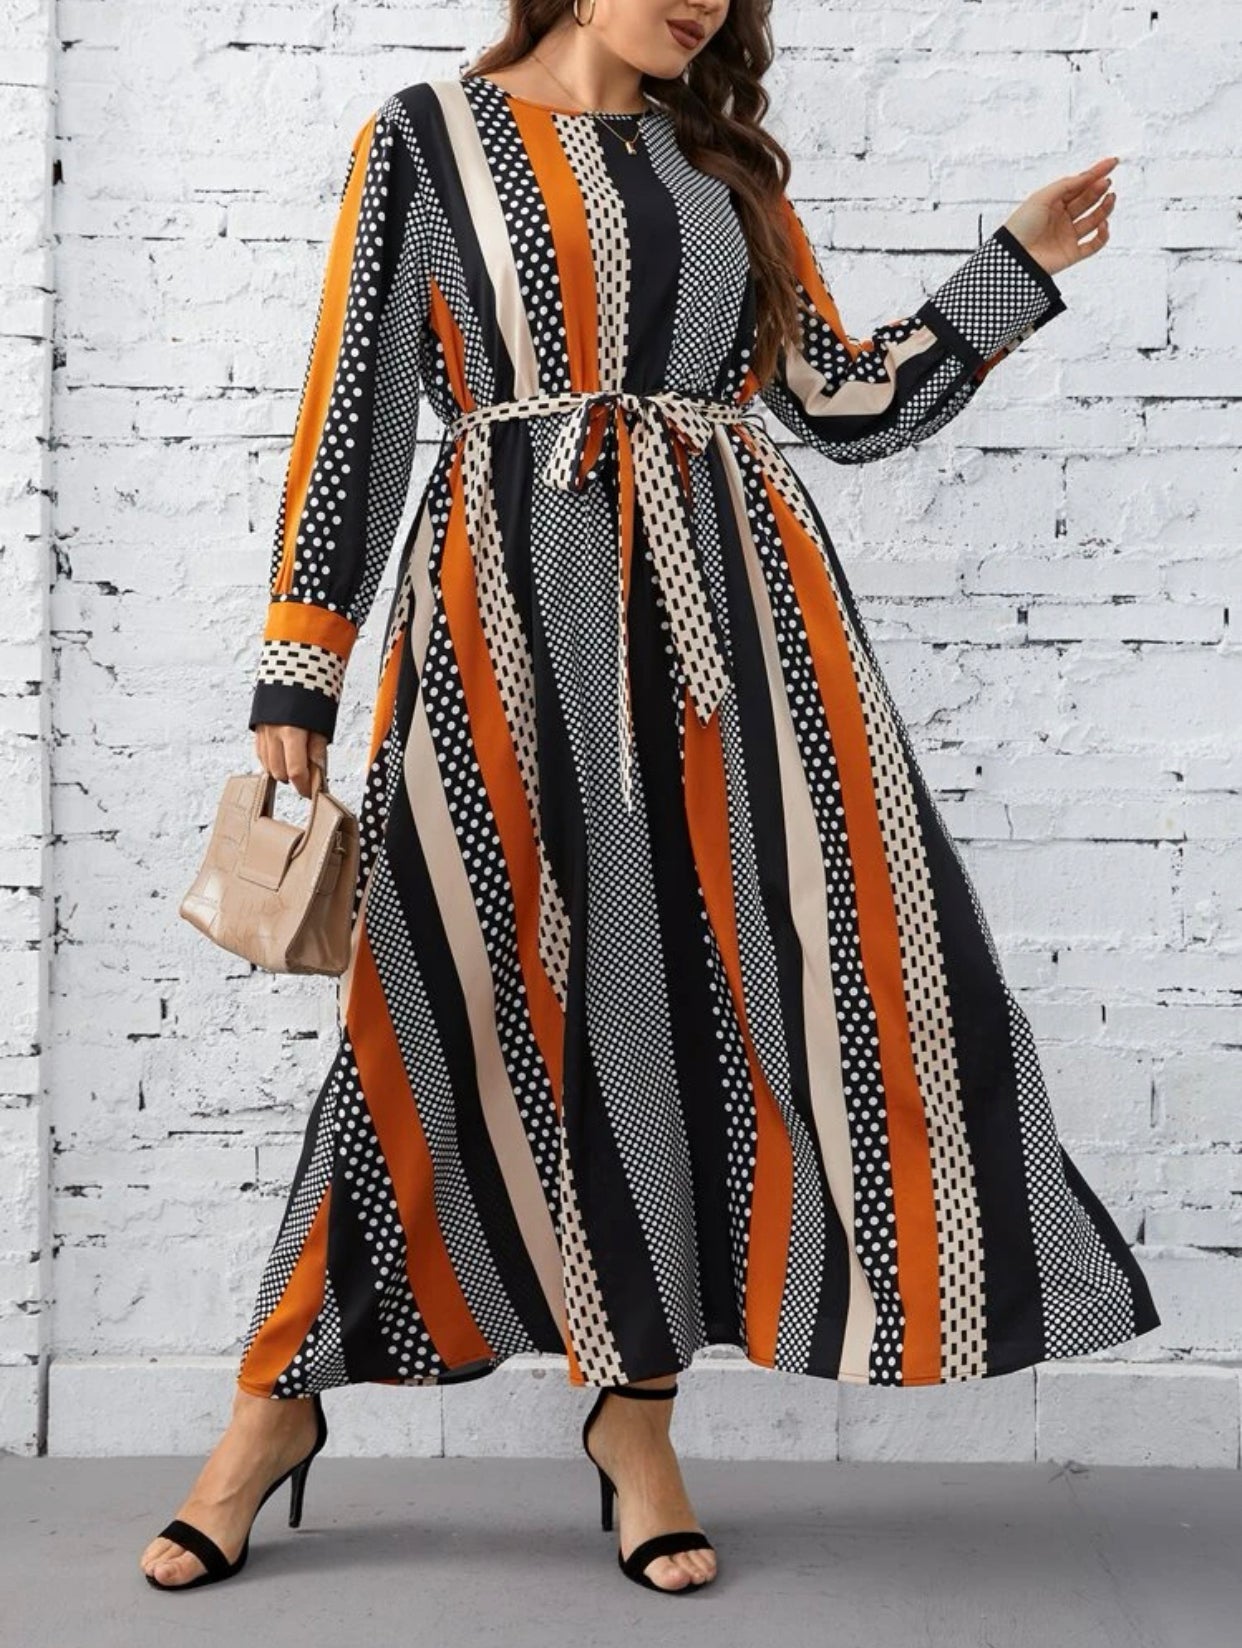 Striped and Polka Dot Print Dress, US Sizes 12 - 20